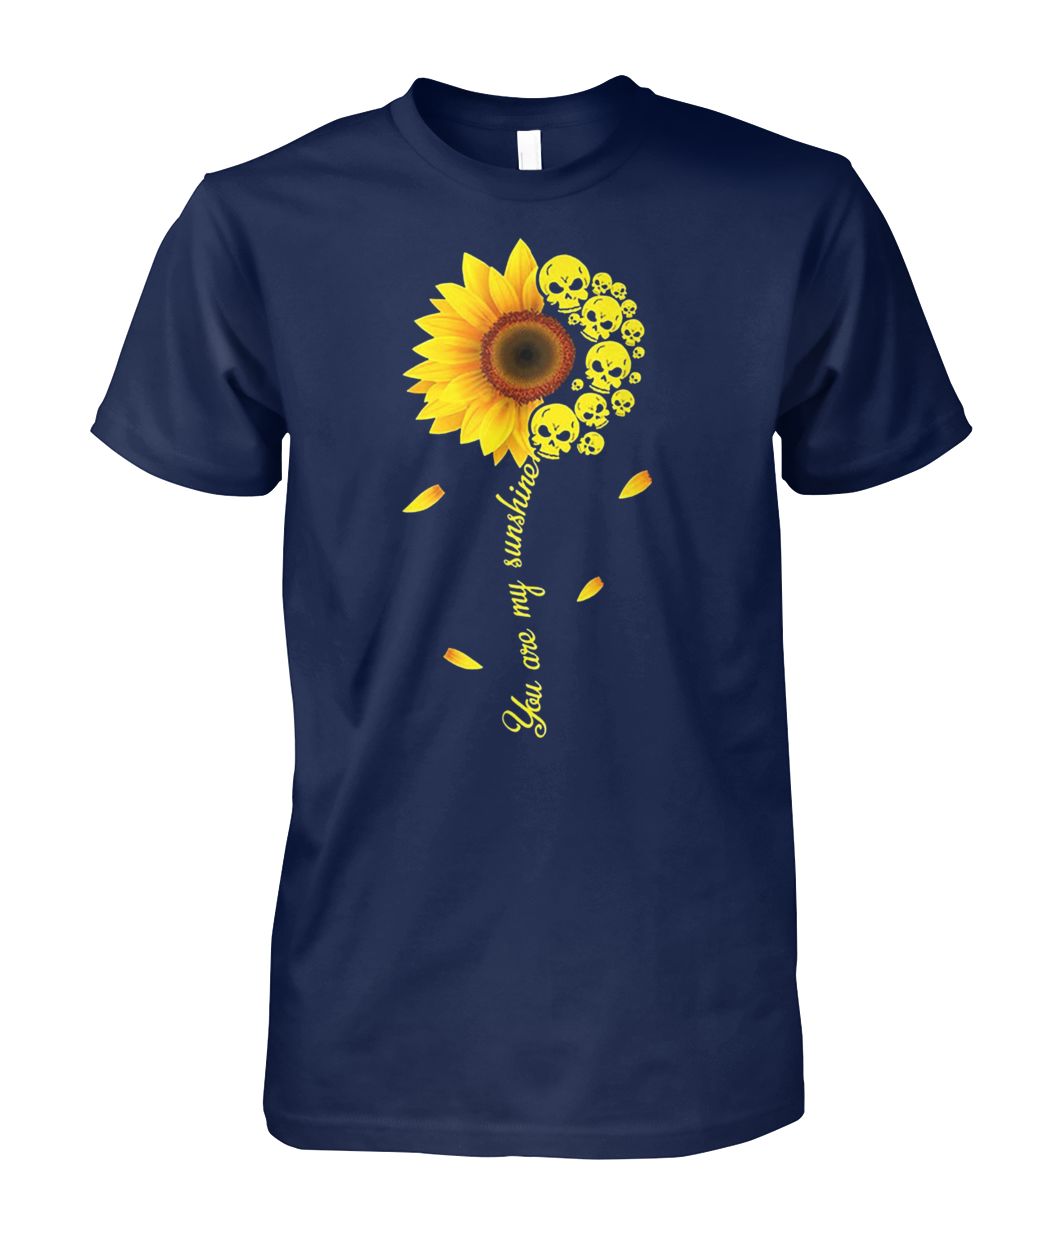 You are my sunshine skull sunflower shirt